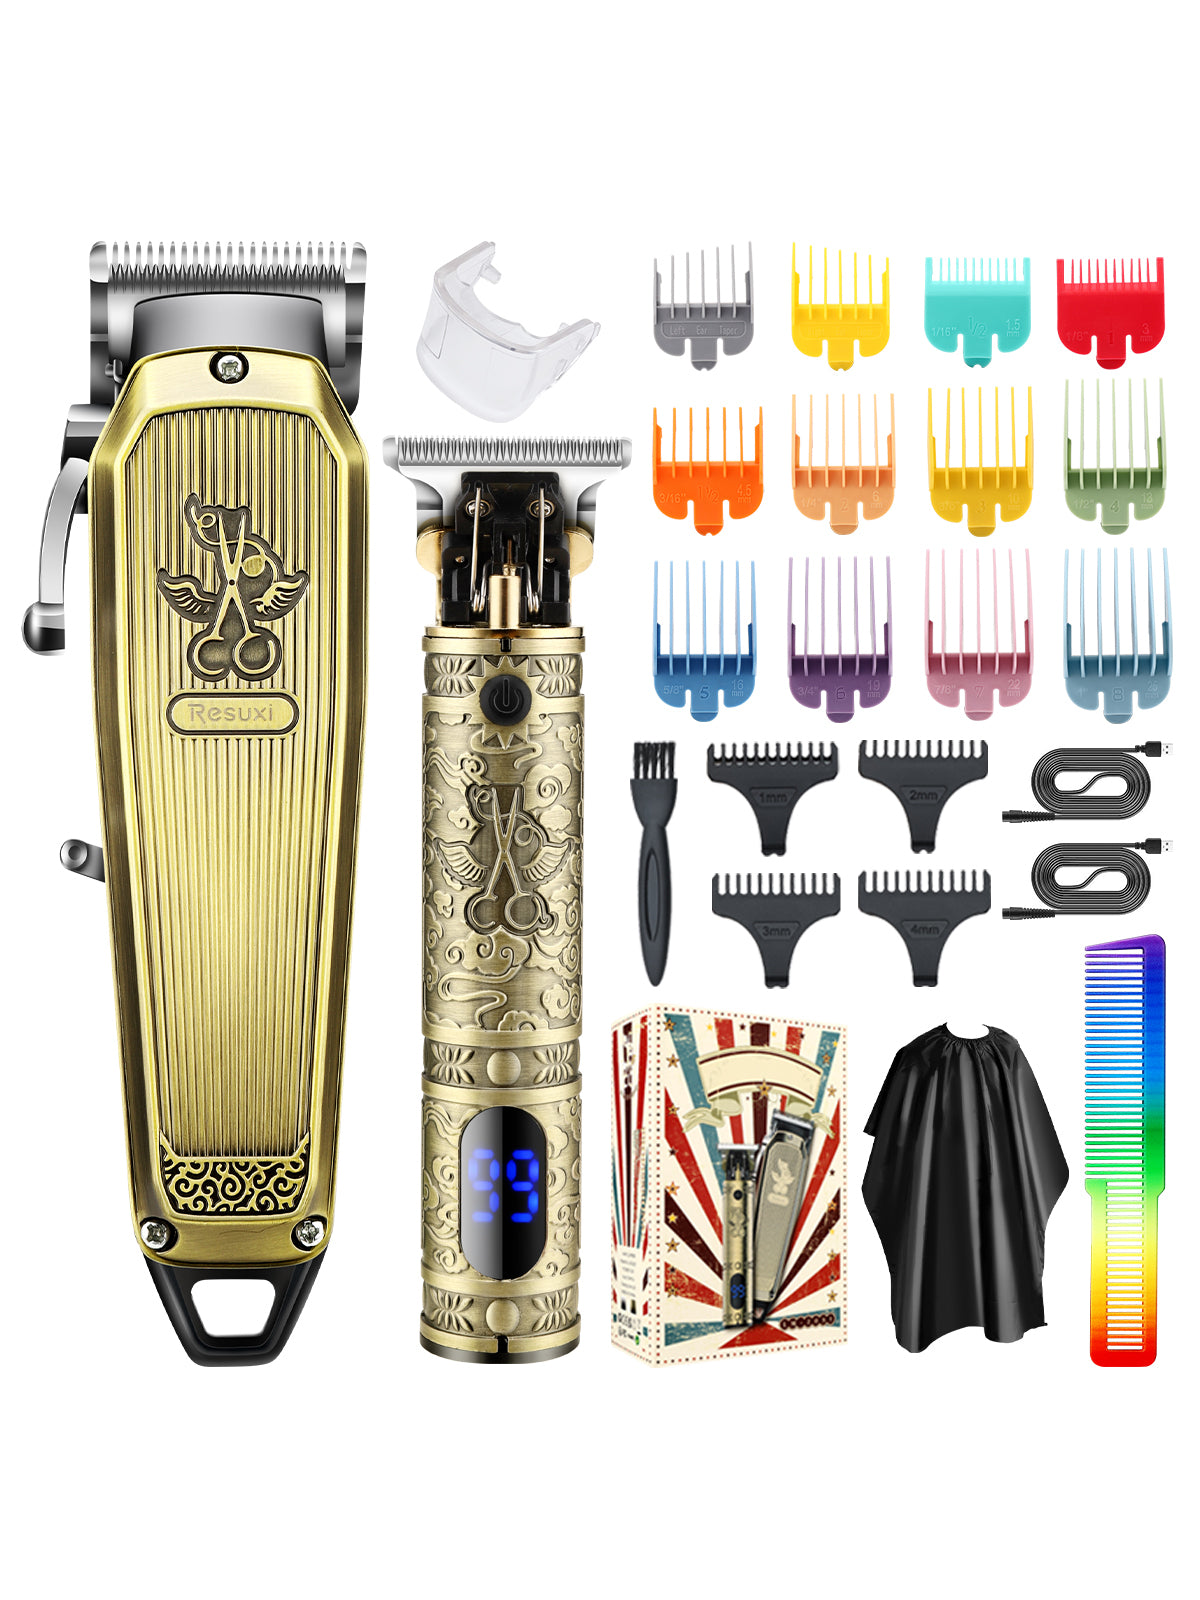 1set Zinc Alloy Hair Clipper, Modern Scissors & Striped Pattern Rechargeable Hair Trimmer For Salon